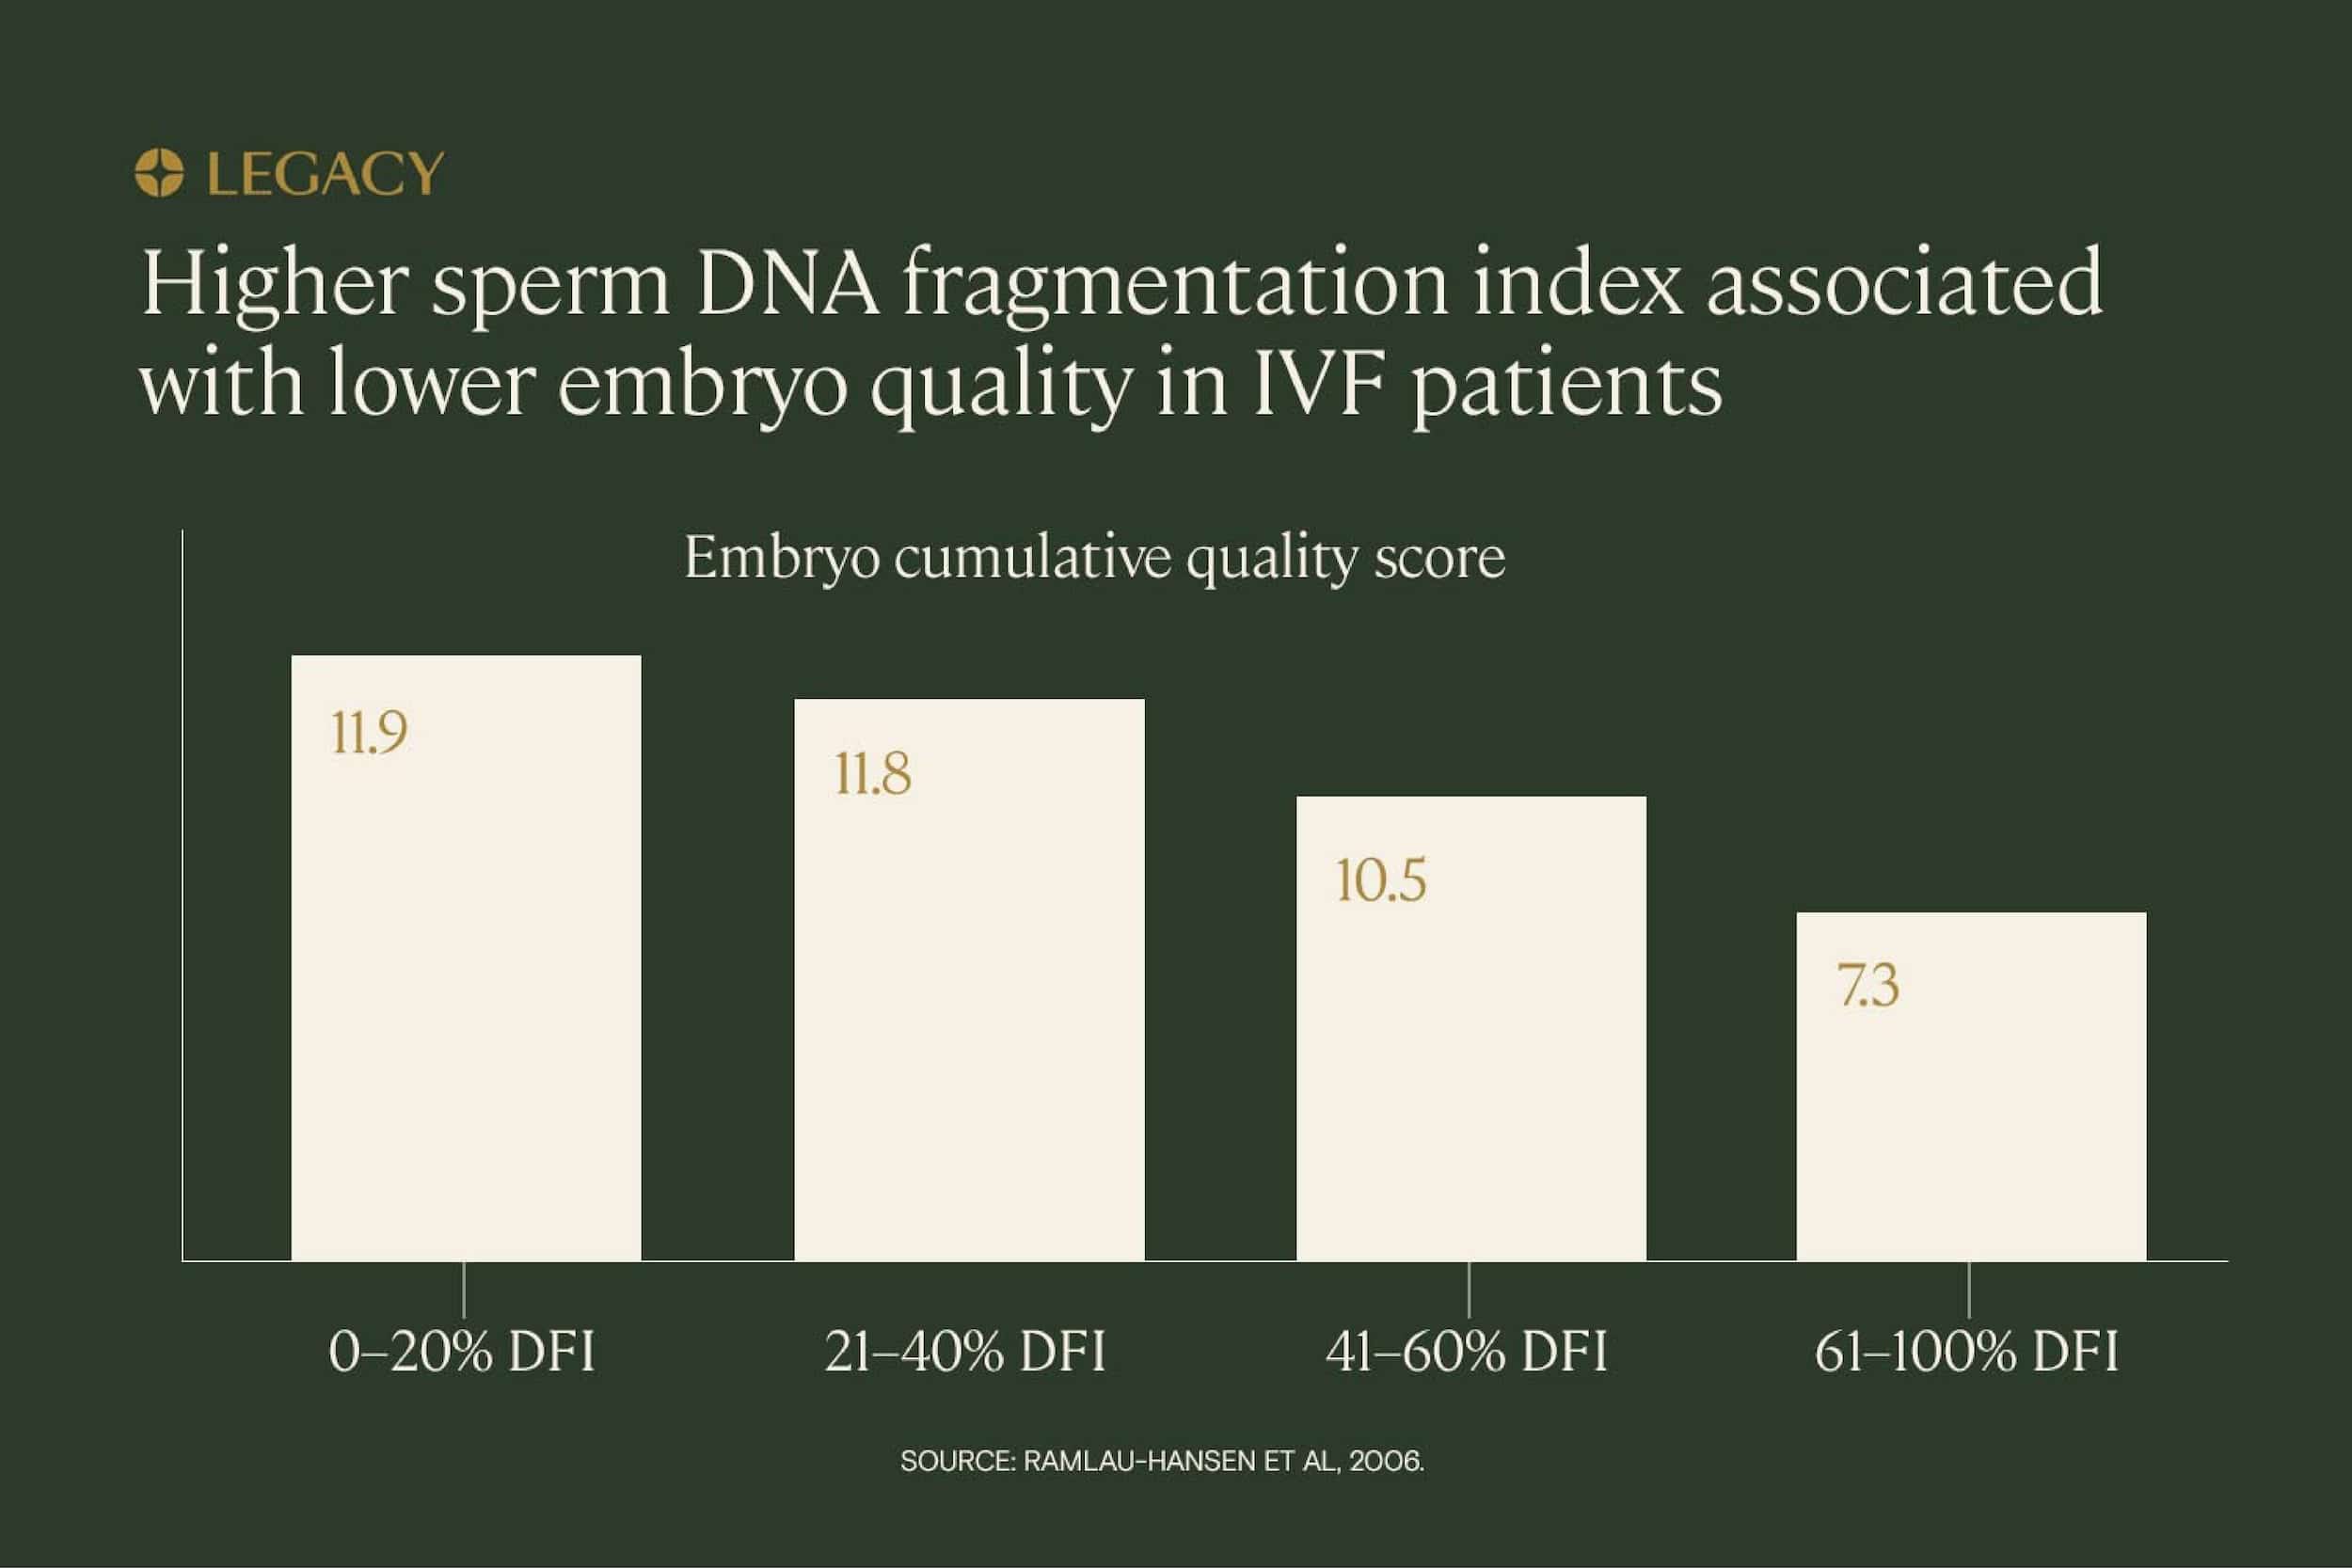 Sperm DNA fragmentation and embryo quality